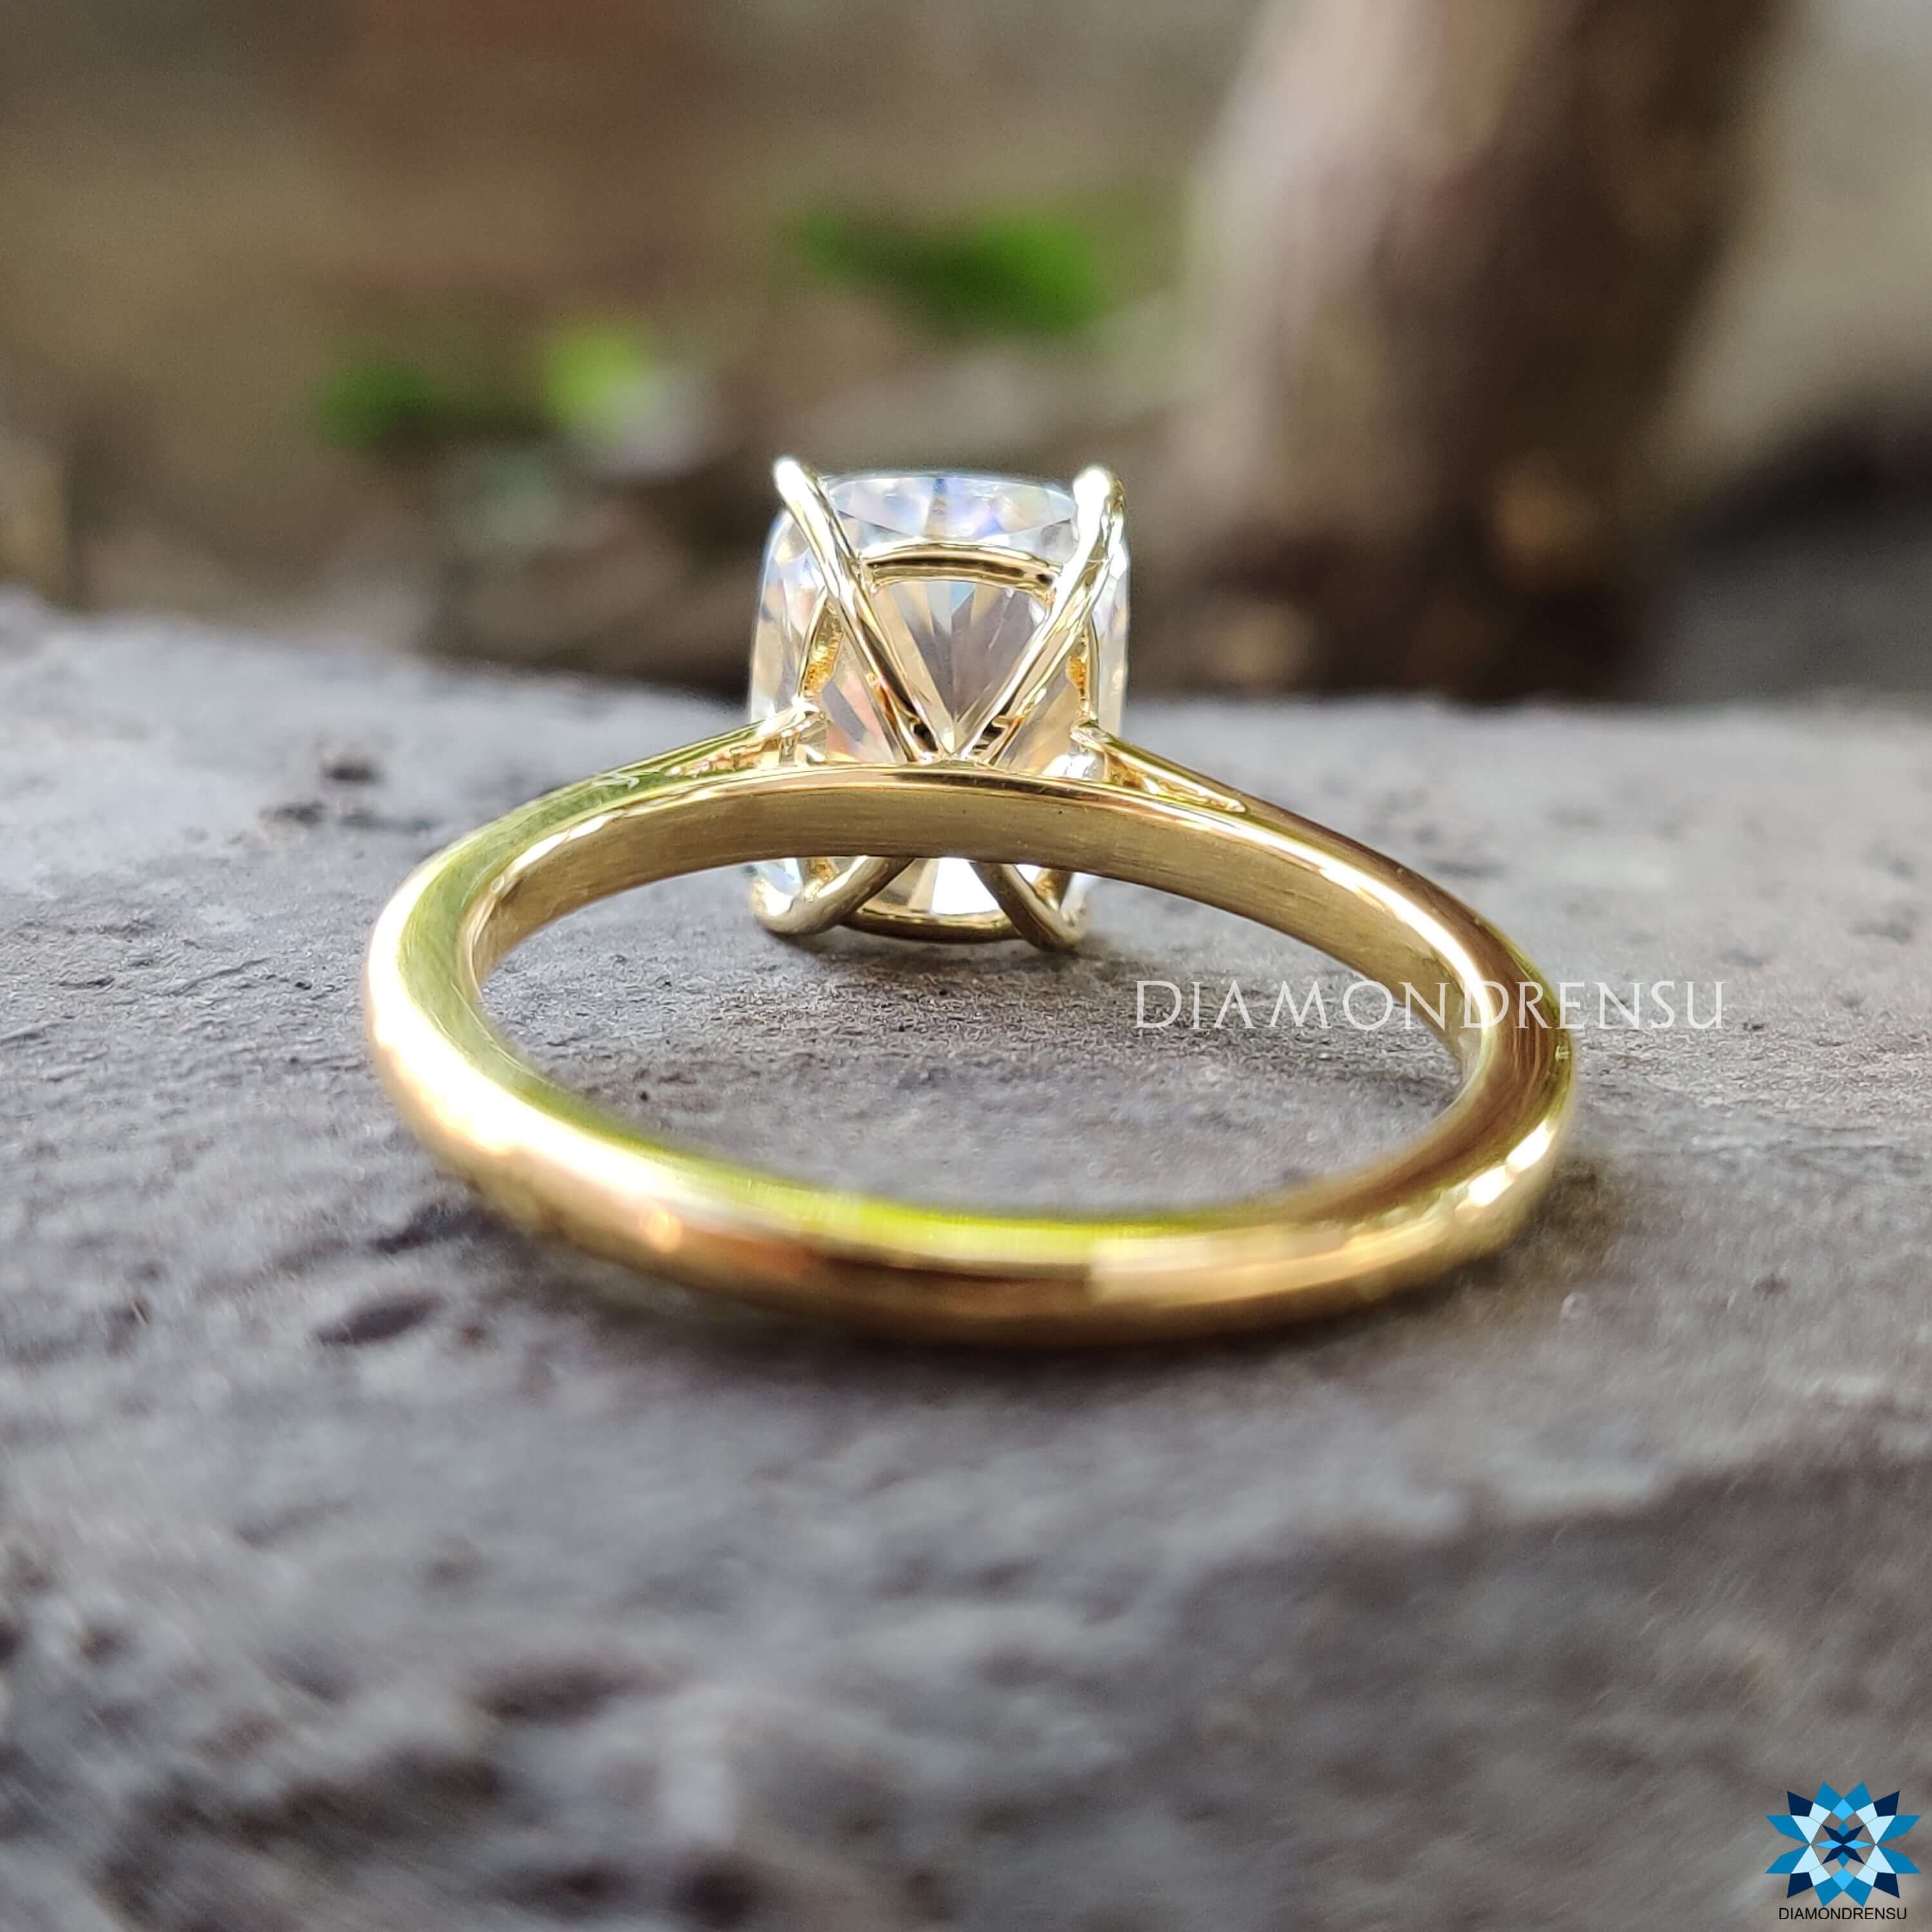 3 Carat Diamond Rings: The Essential Buying Guide | Ritani